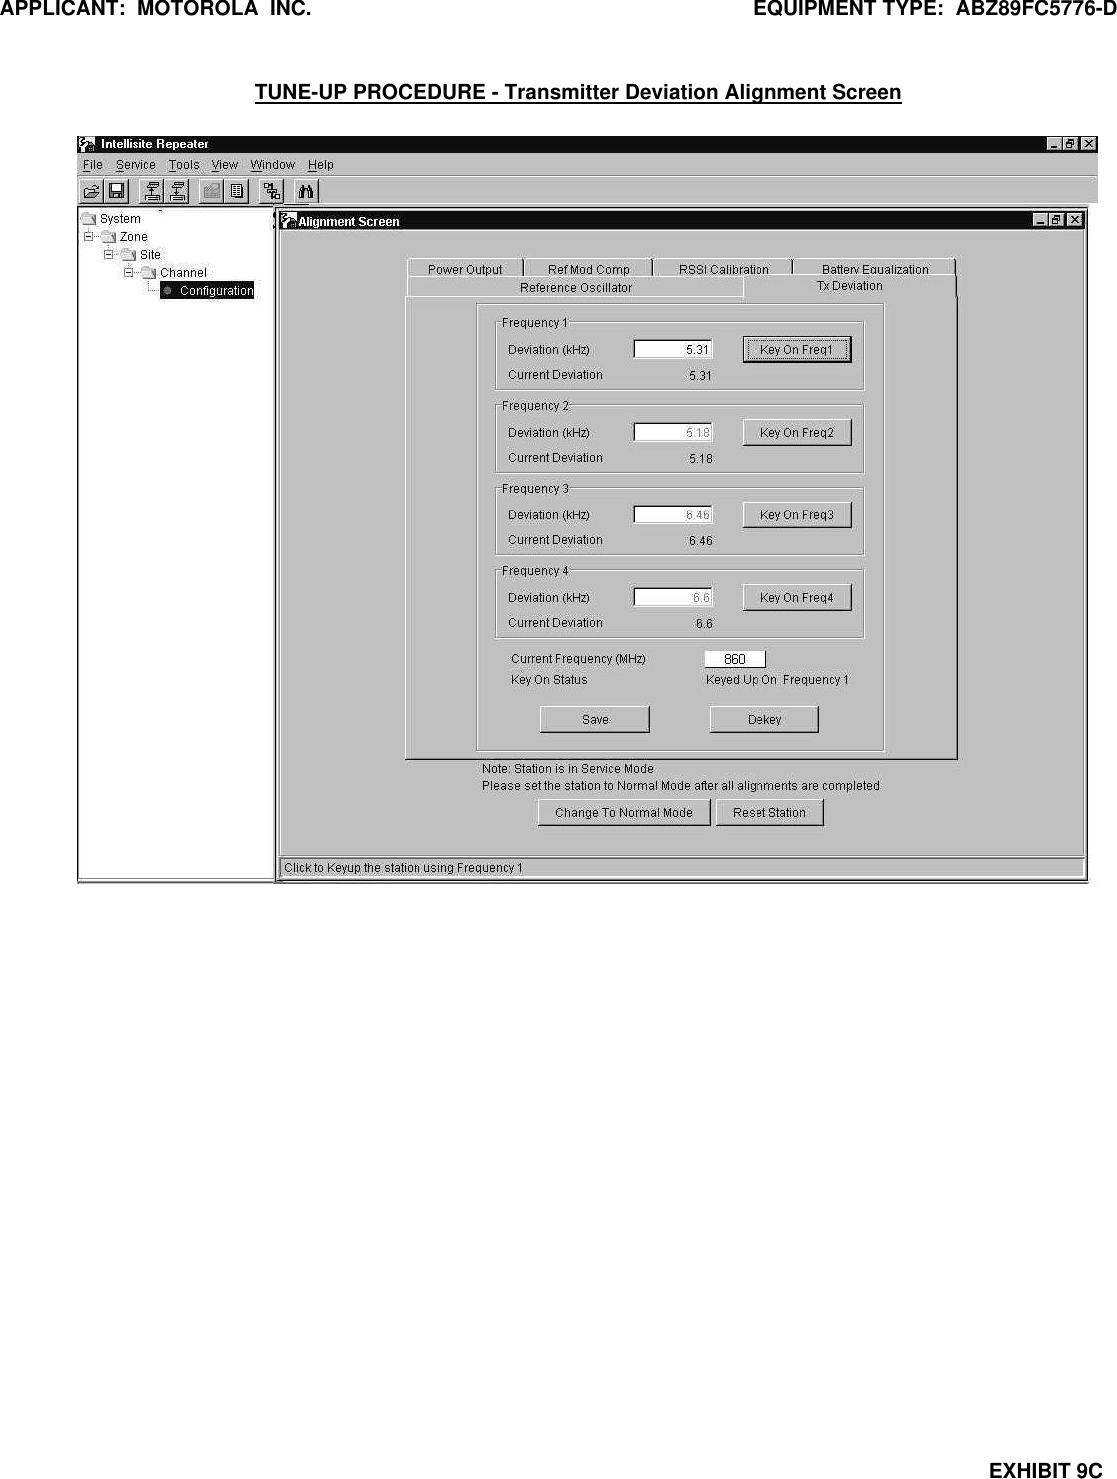 APPLICANT:  MOTOROLA  INC. EQUIPMENT TYPE:  ABZ89FC5776-DEXHIBIT 9CTUNE-UP PROCEDURE - Transmitter Deviation Alignment Screen